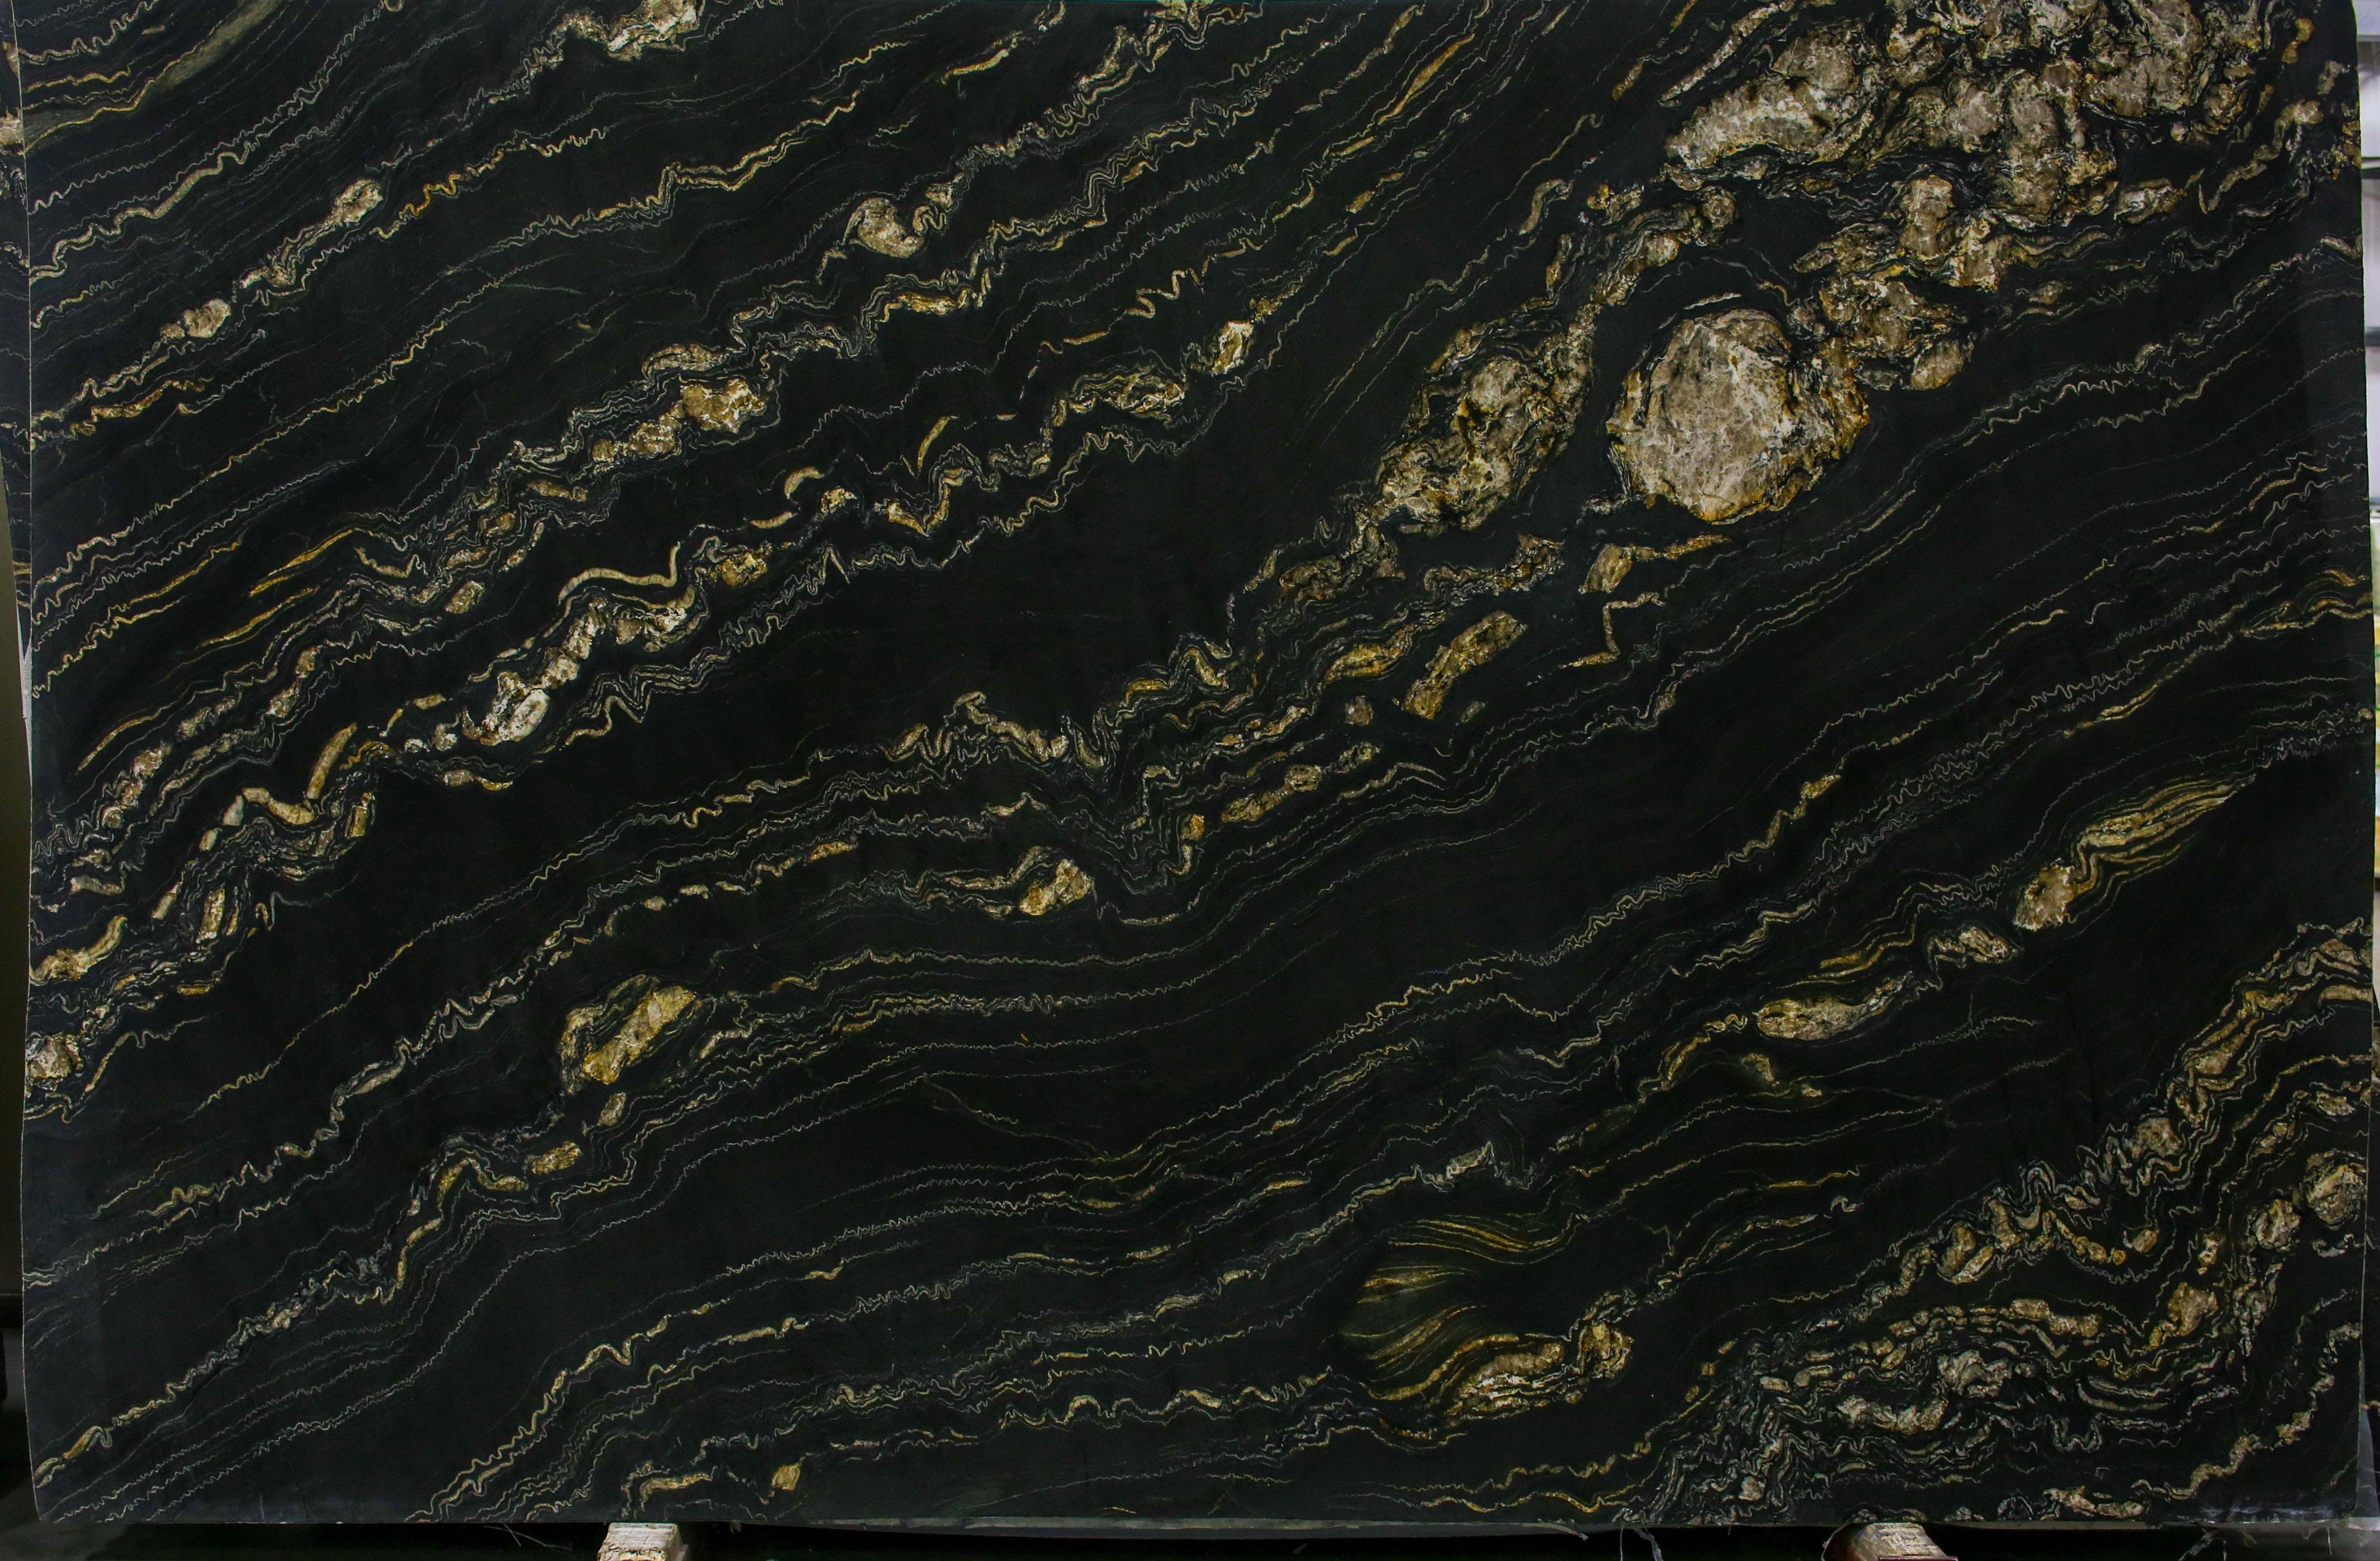  Kalandula Black Quartzite Slab 3/4  Leather Stone - P283#19 -  76x116 